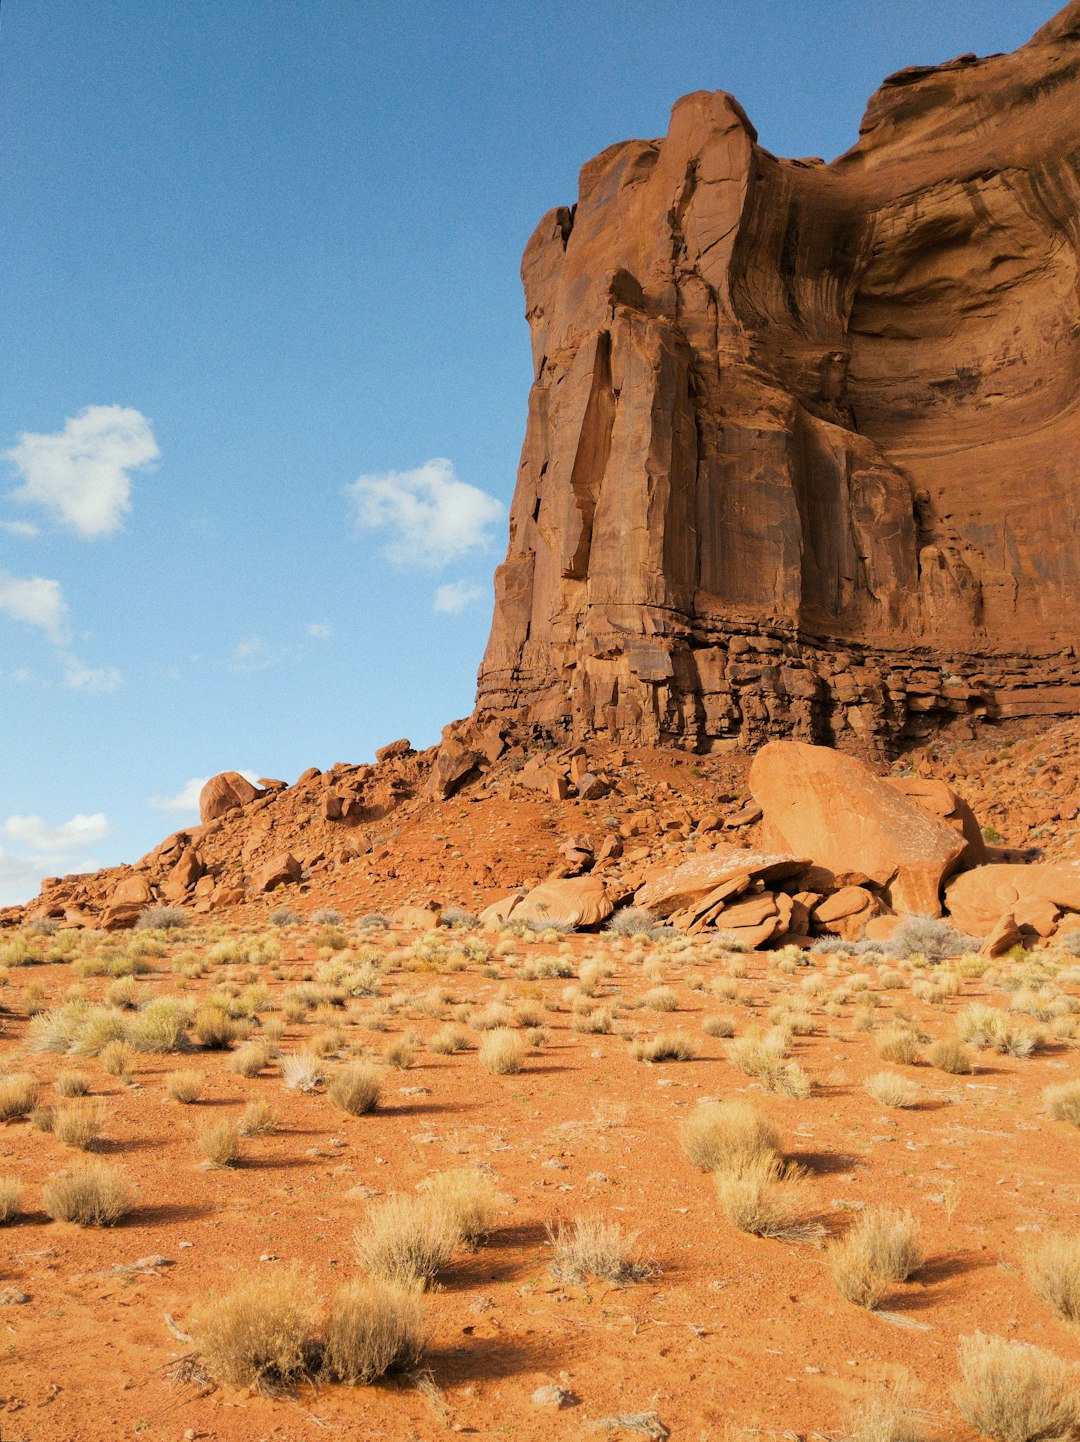 Desert Rock Pictures Download Free Images On Unsplash